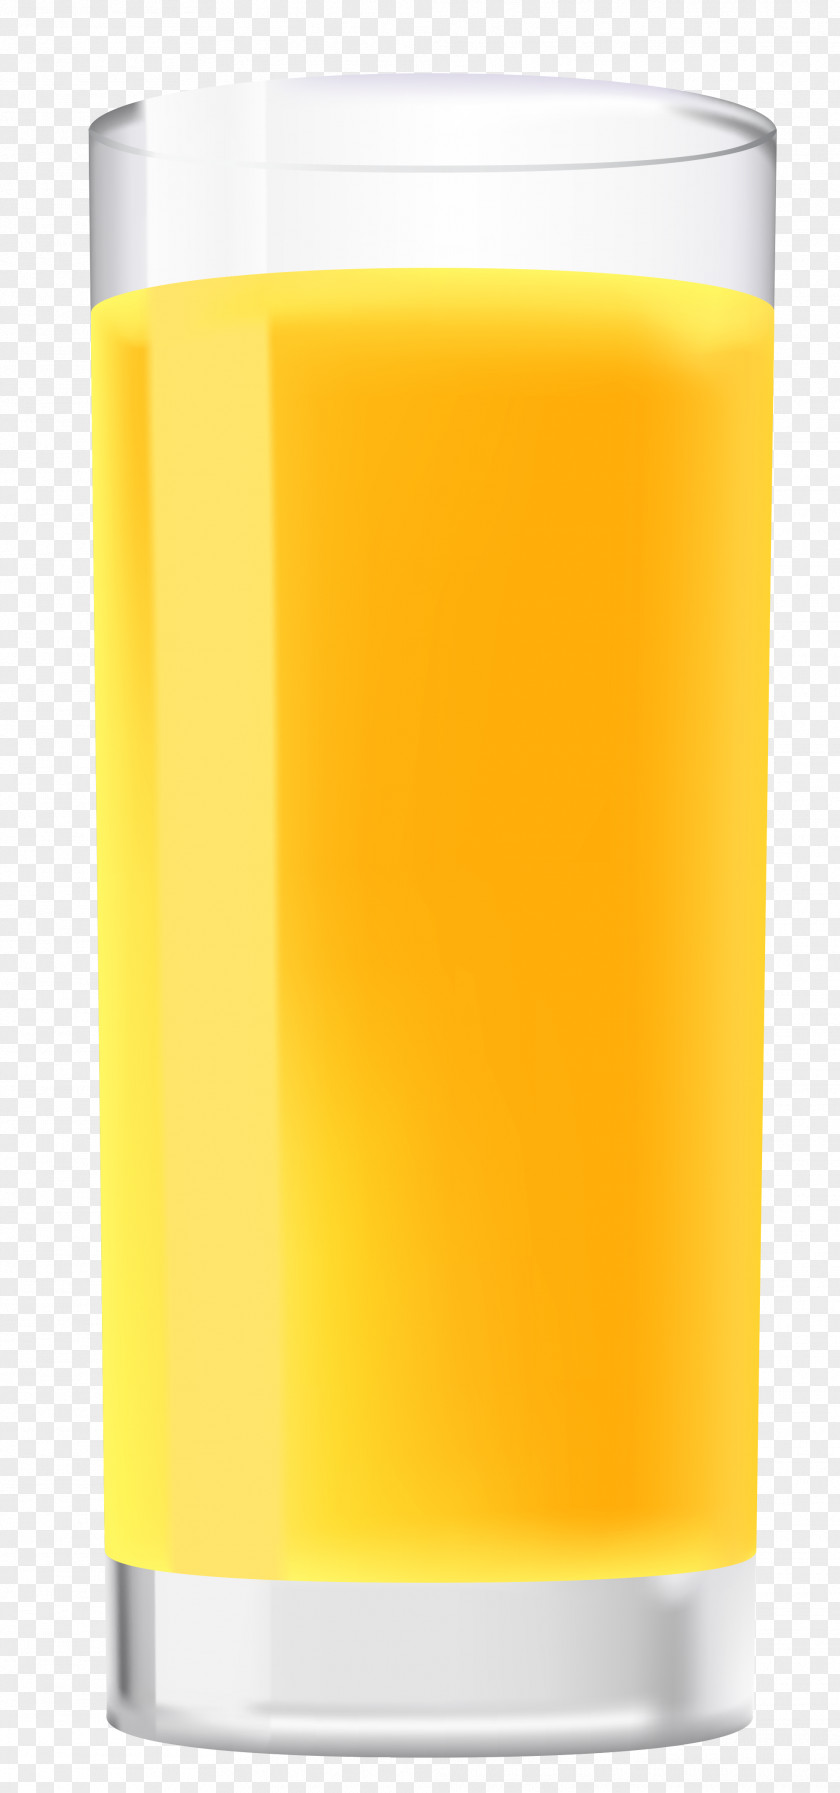 Glass Of Orange Juice Clipart Image Harvey Wallbanger Drink PNG